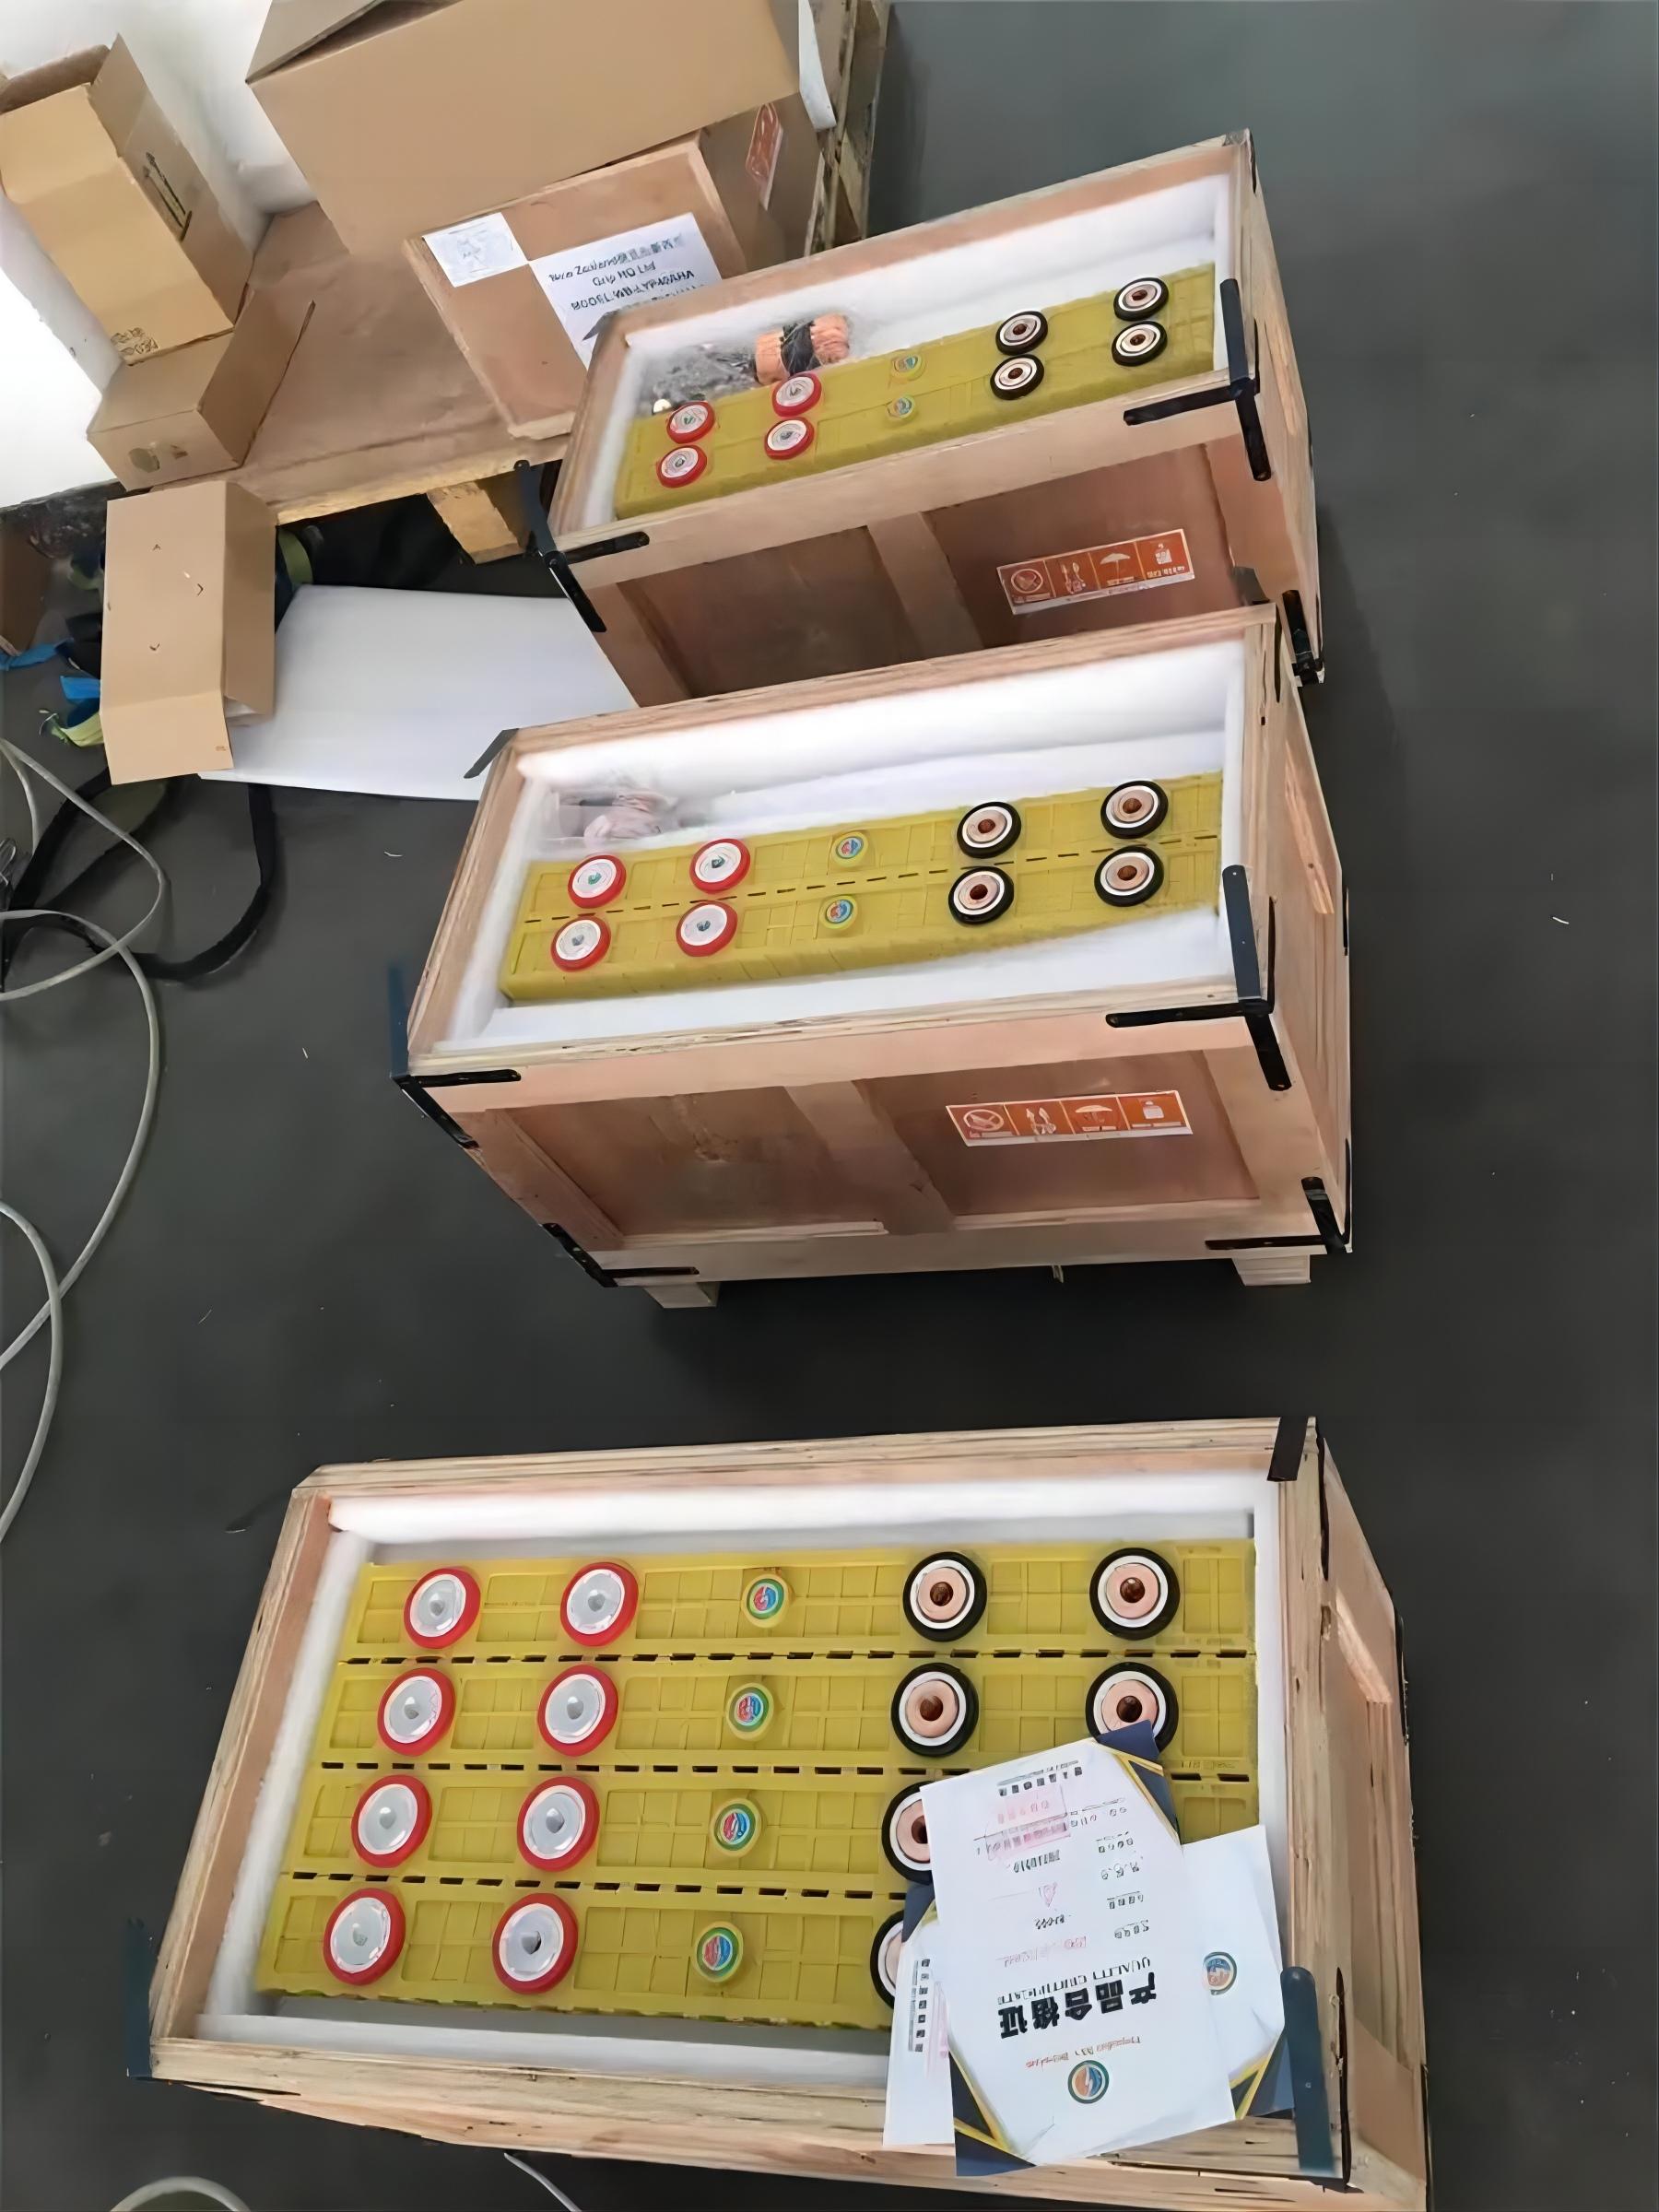 8pcs Winston 700Ah Lifepo4 Battery Cells Were shipped to US